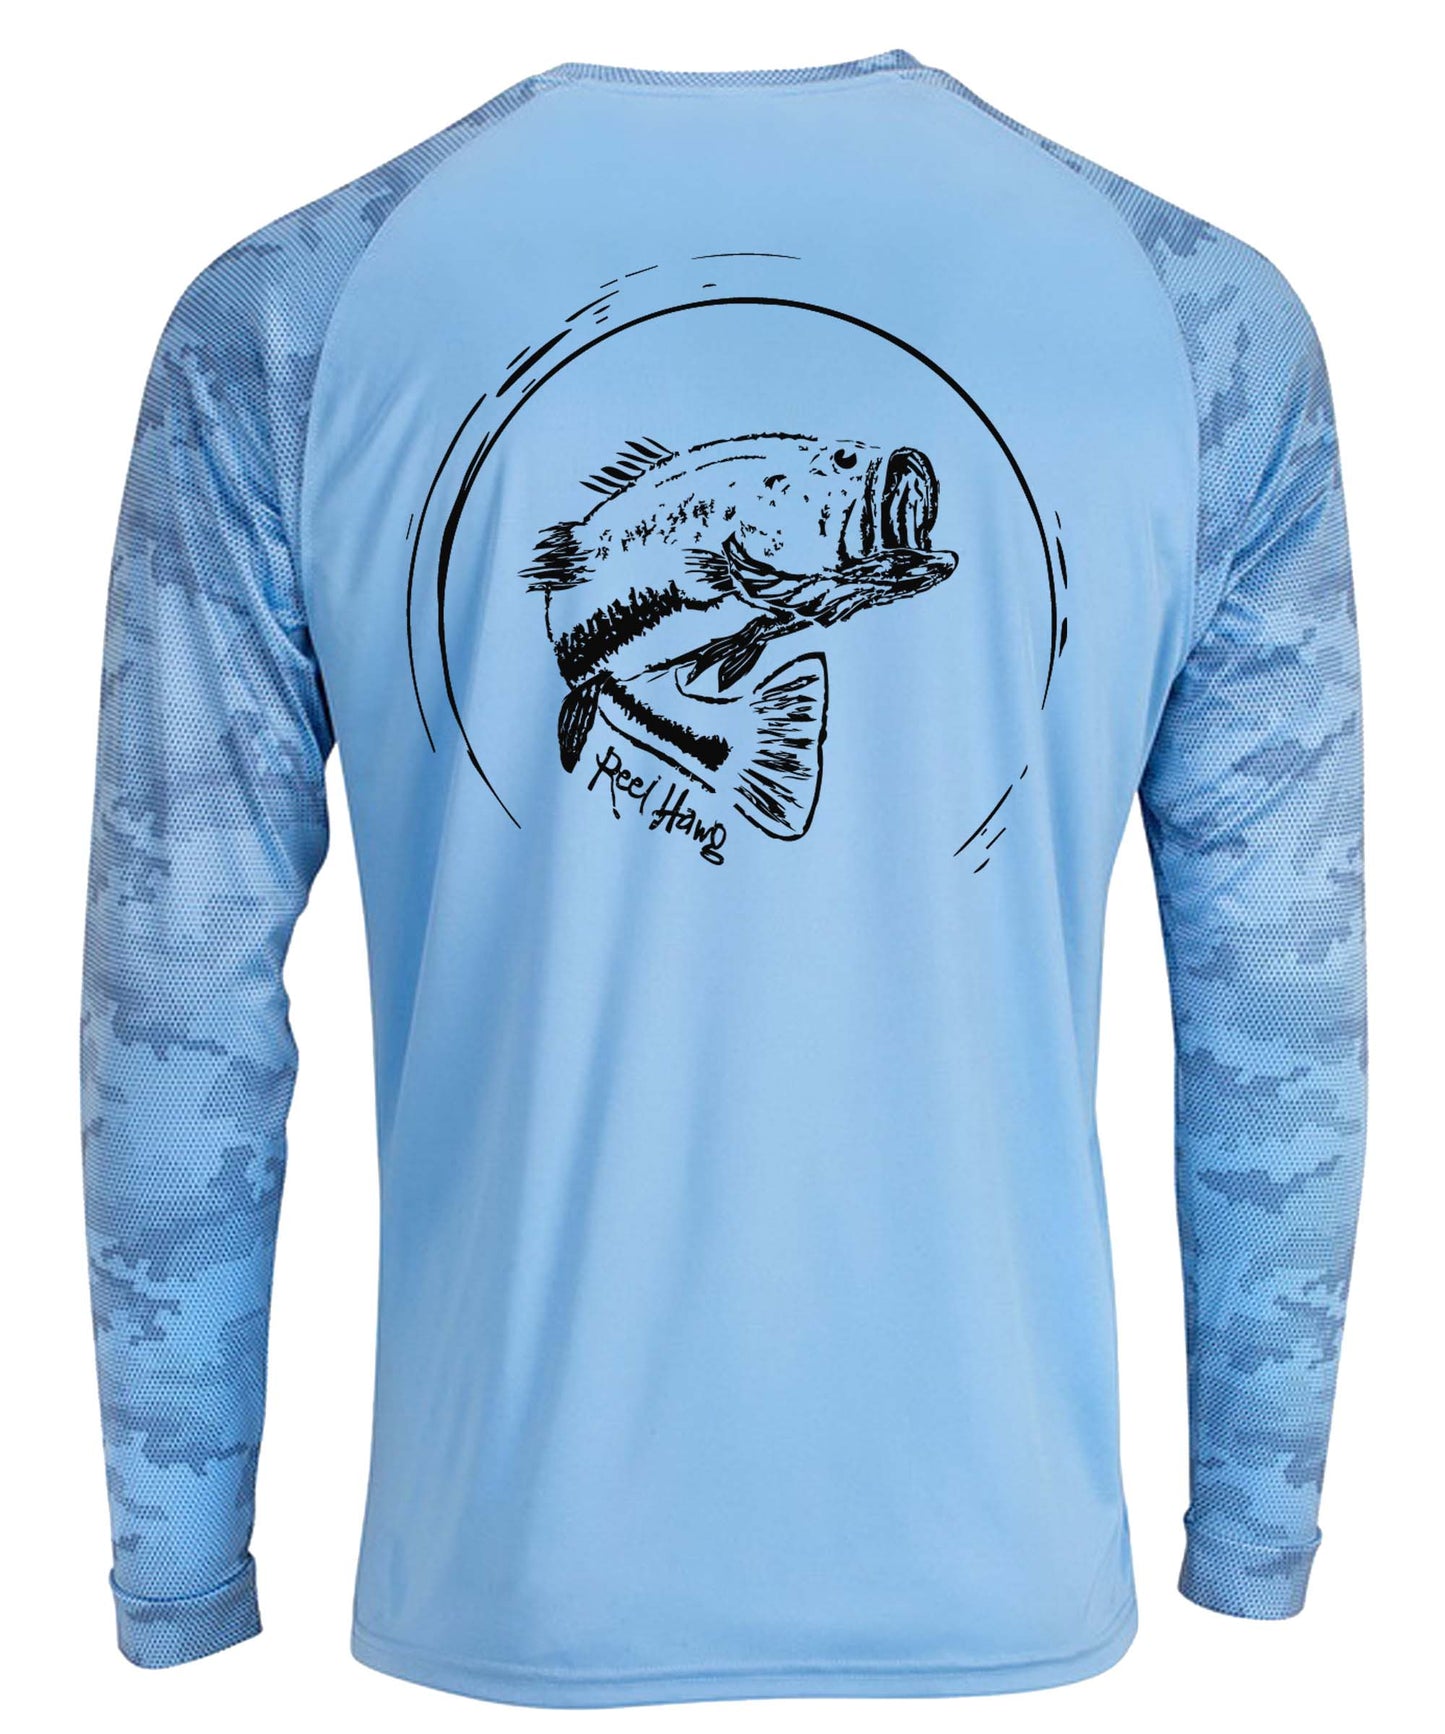 Bass fishing "Reel Hawg" blue mist performance digital camo long sleeve shirt with 50+ UV sun protection by Reel Fishy